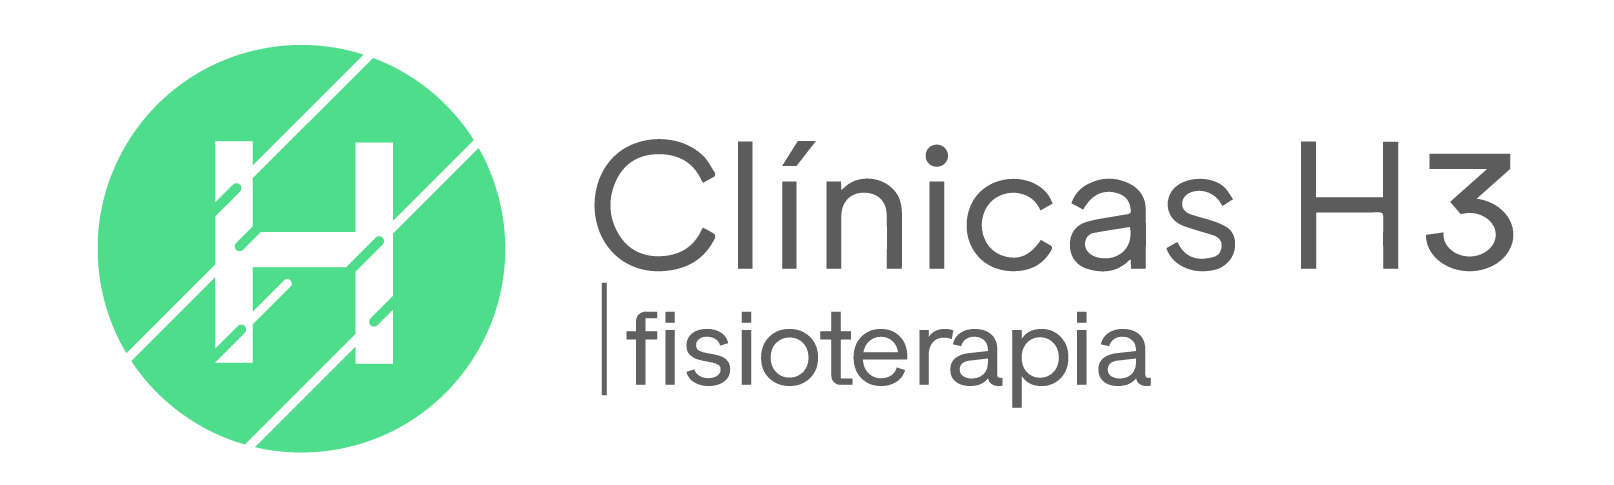 Logotipo Clínicas H3 fisioterapia alcalá de Henares